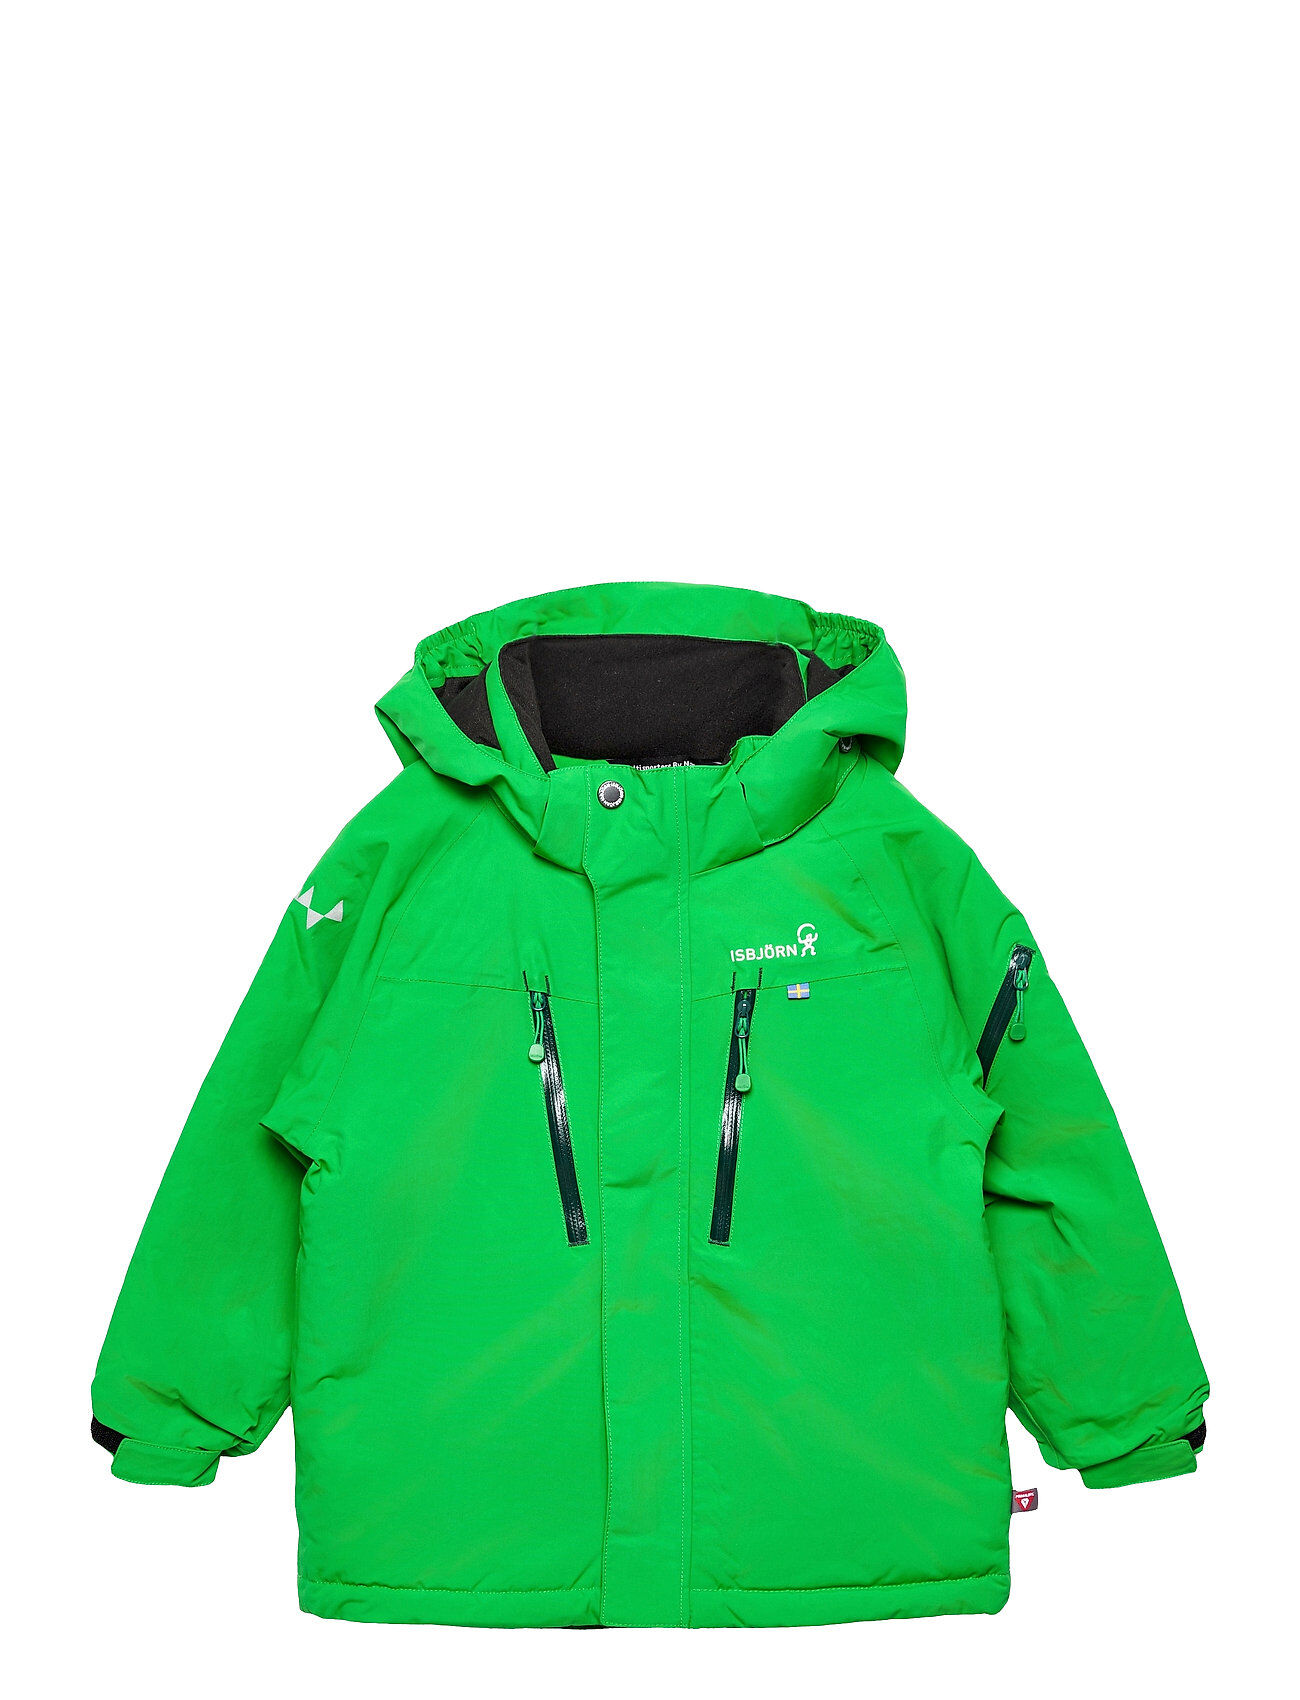 ISBJÖRN of Sweden Helicopter Winter Jacket Outerwear Snow/ski Clothing Snow/ski Jacket Grønn ISBJÖRN Of Sweden